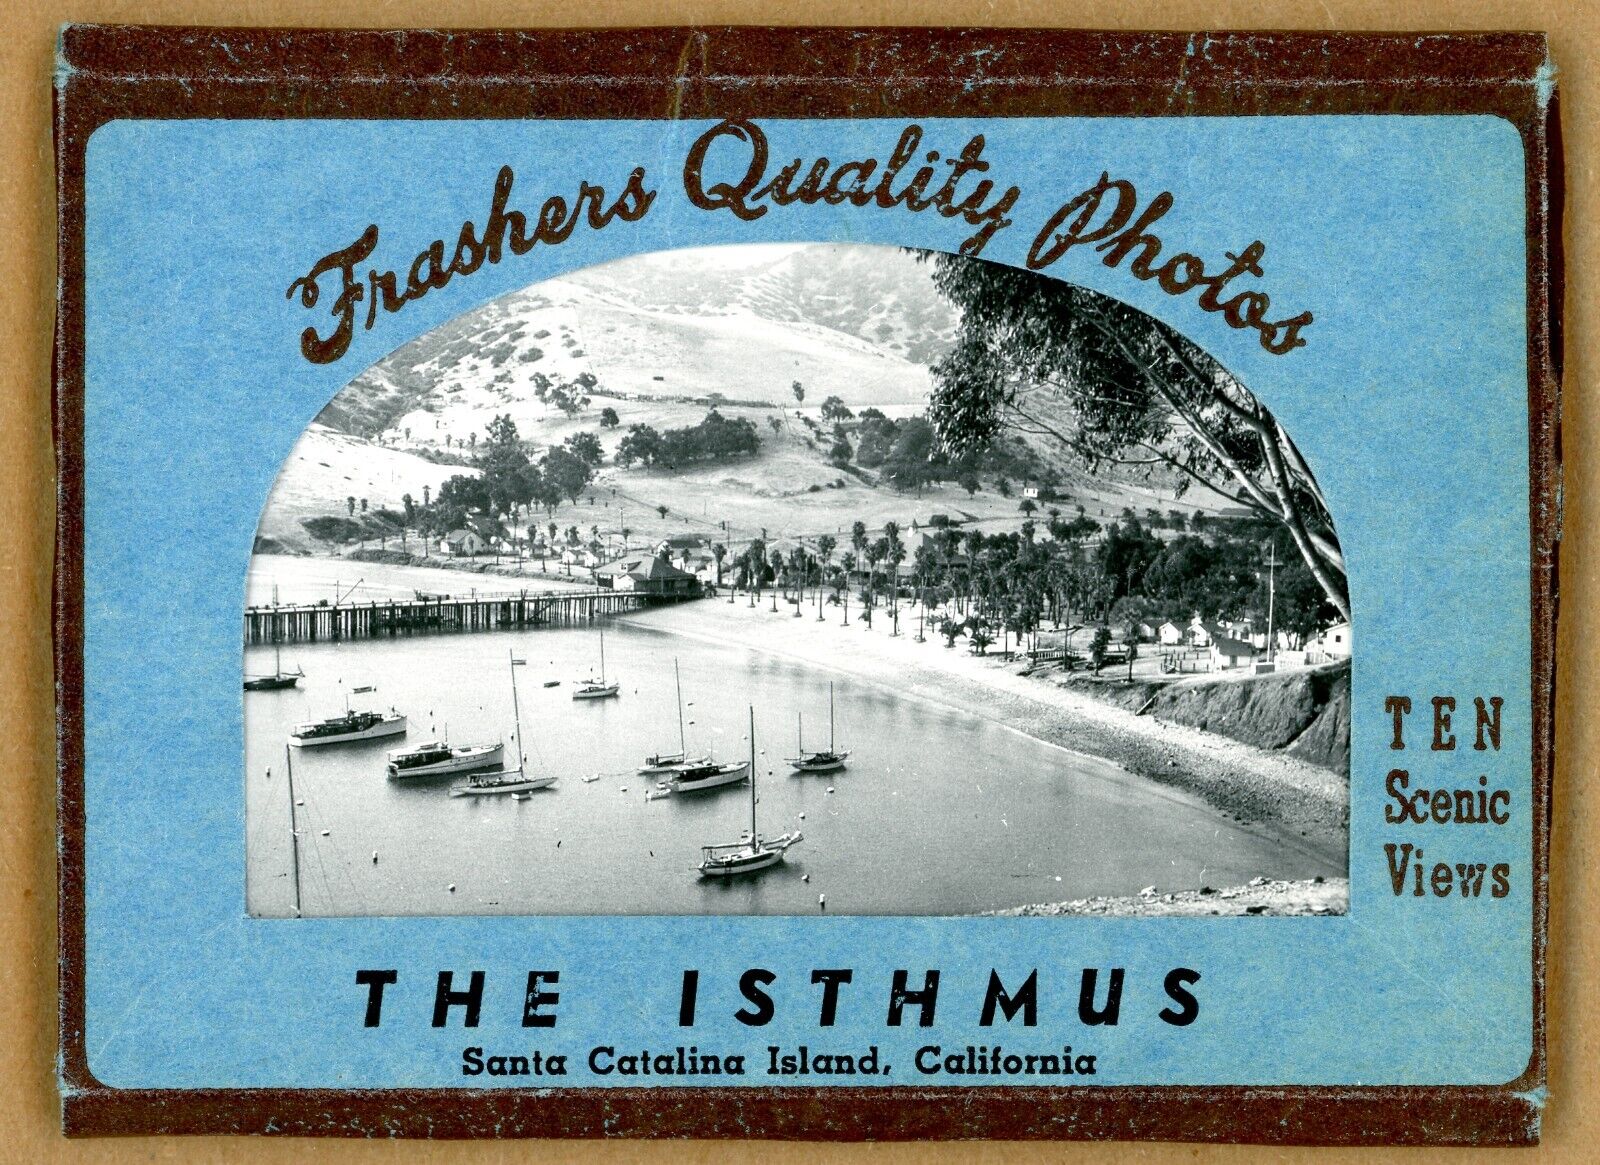 Frashers Quality Photos 10 mini Scenic Views of the Isthmus Catalina Island